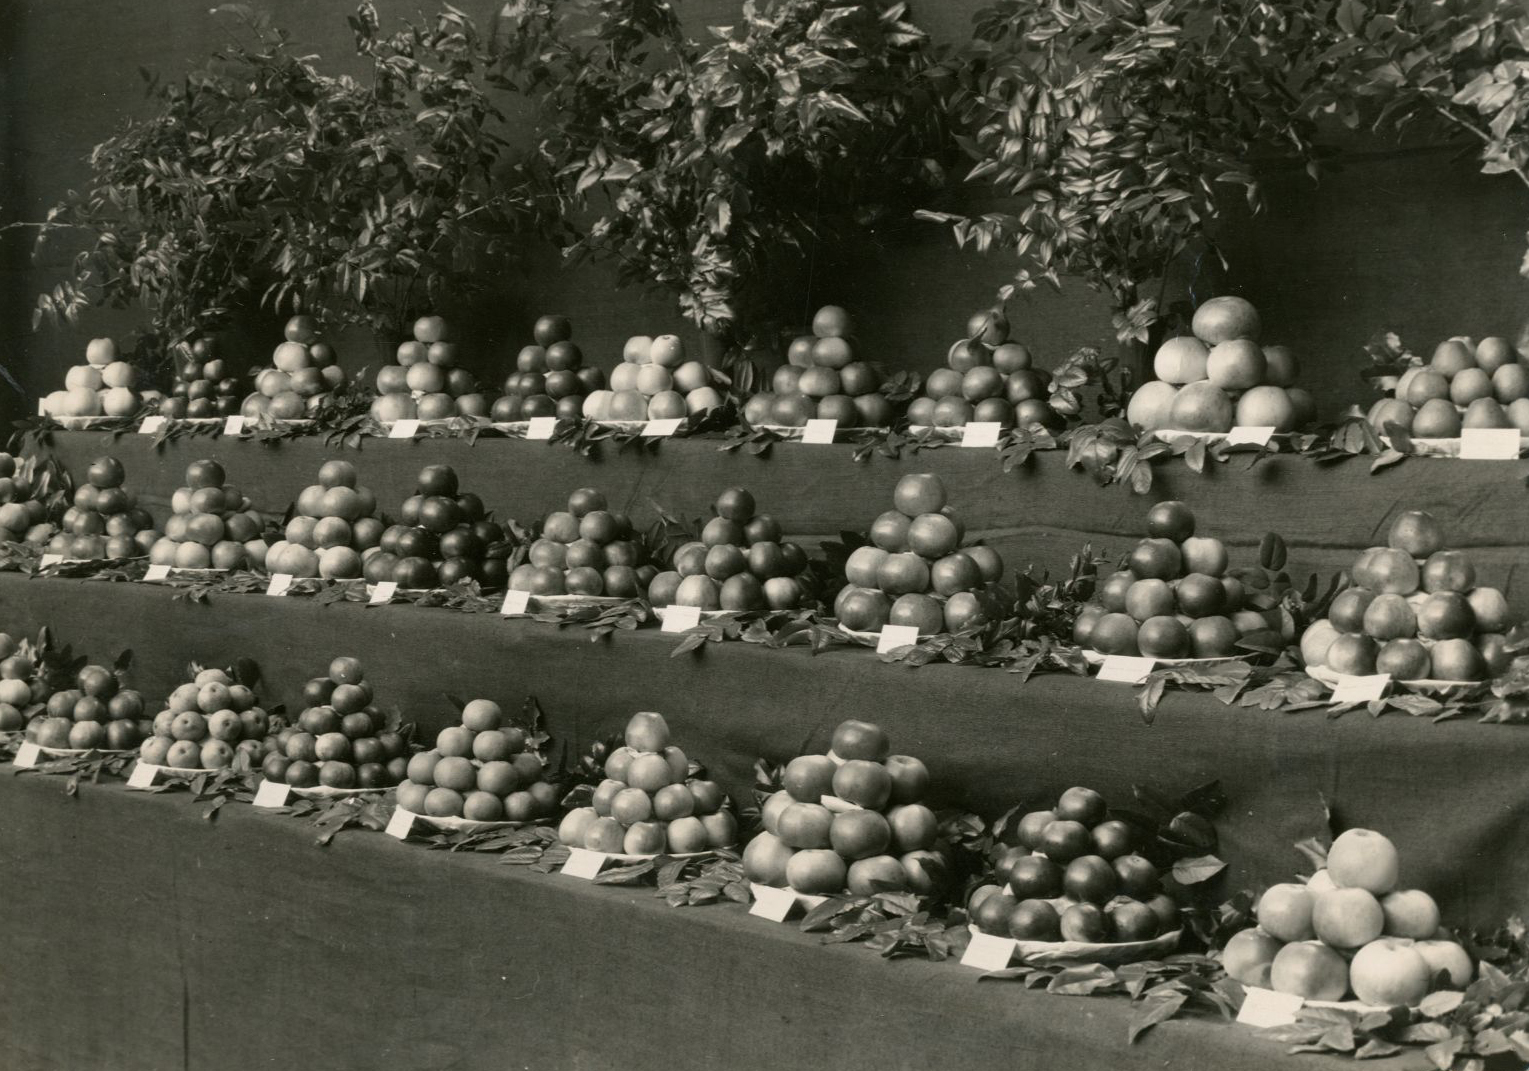 Prize-winning apples, 1959, An exhibit of 27 varieties of apples